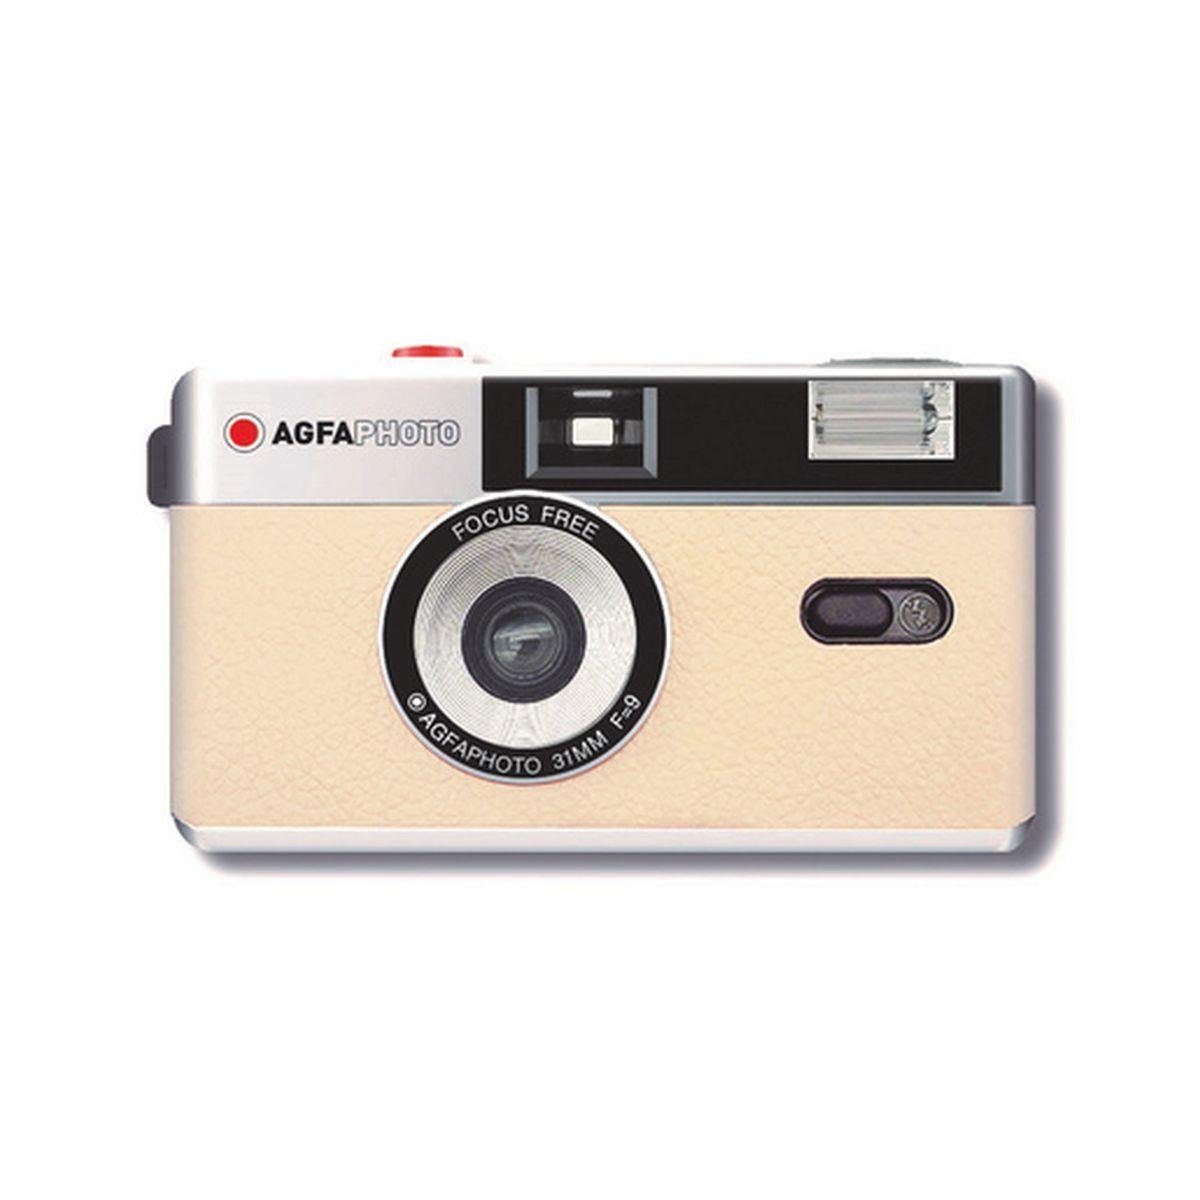 Camera beige Kompaktkamera Reusable Photo AgfaPhoto